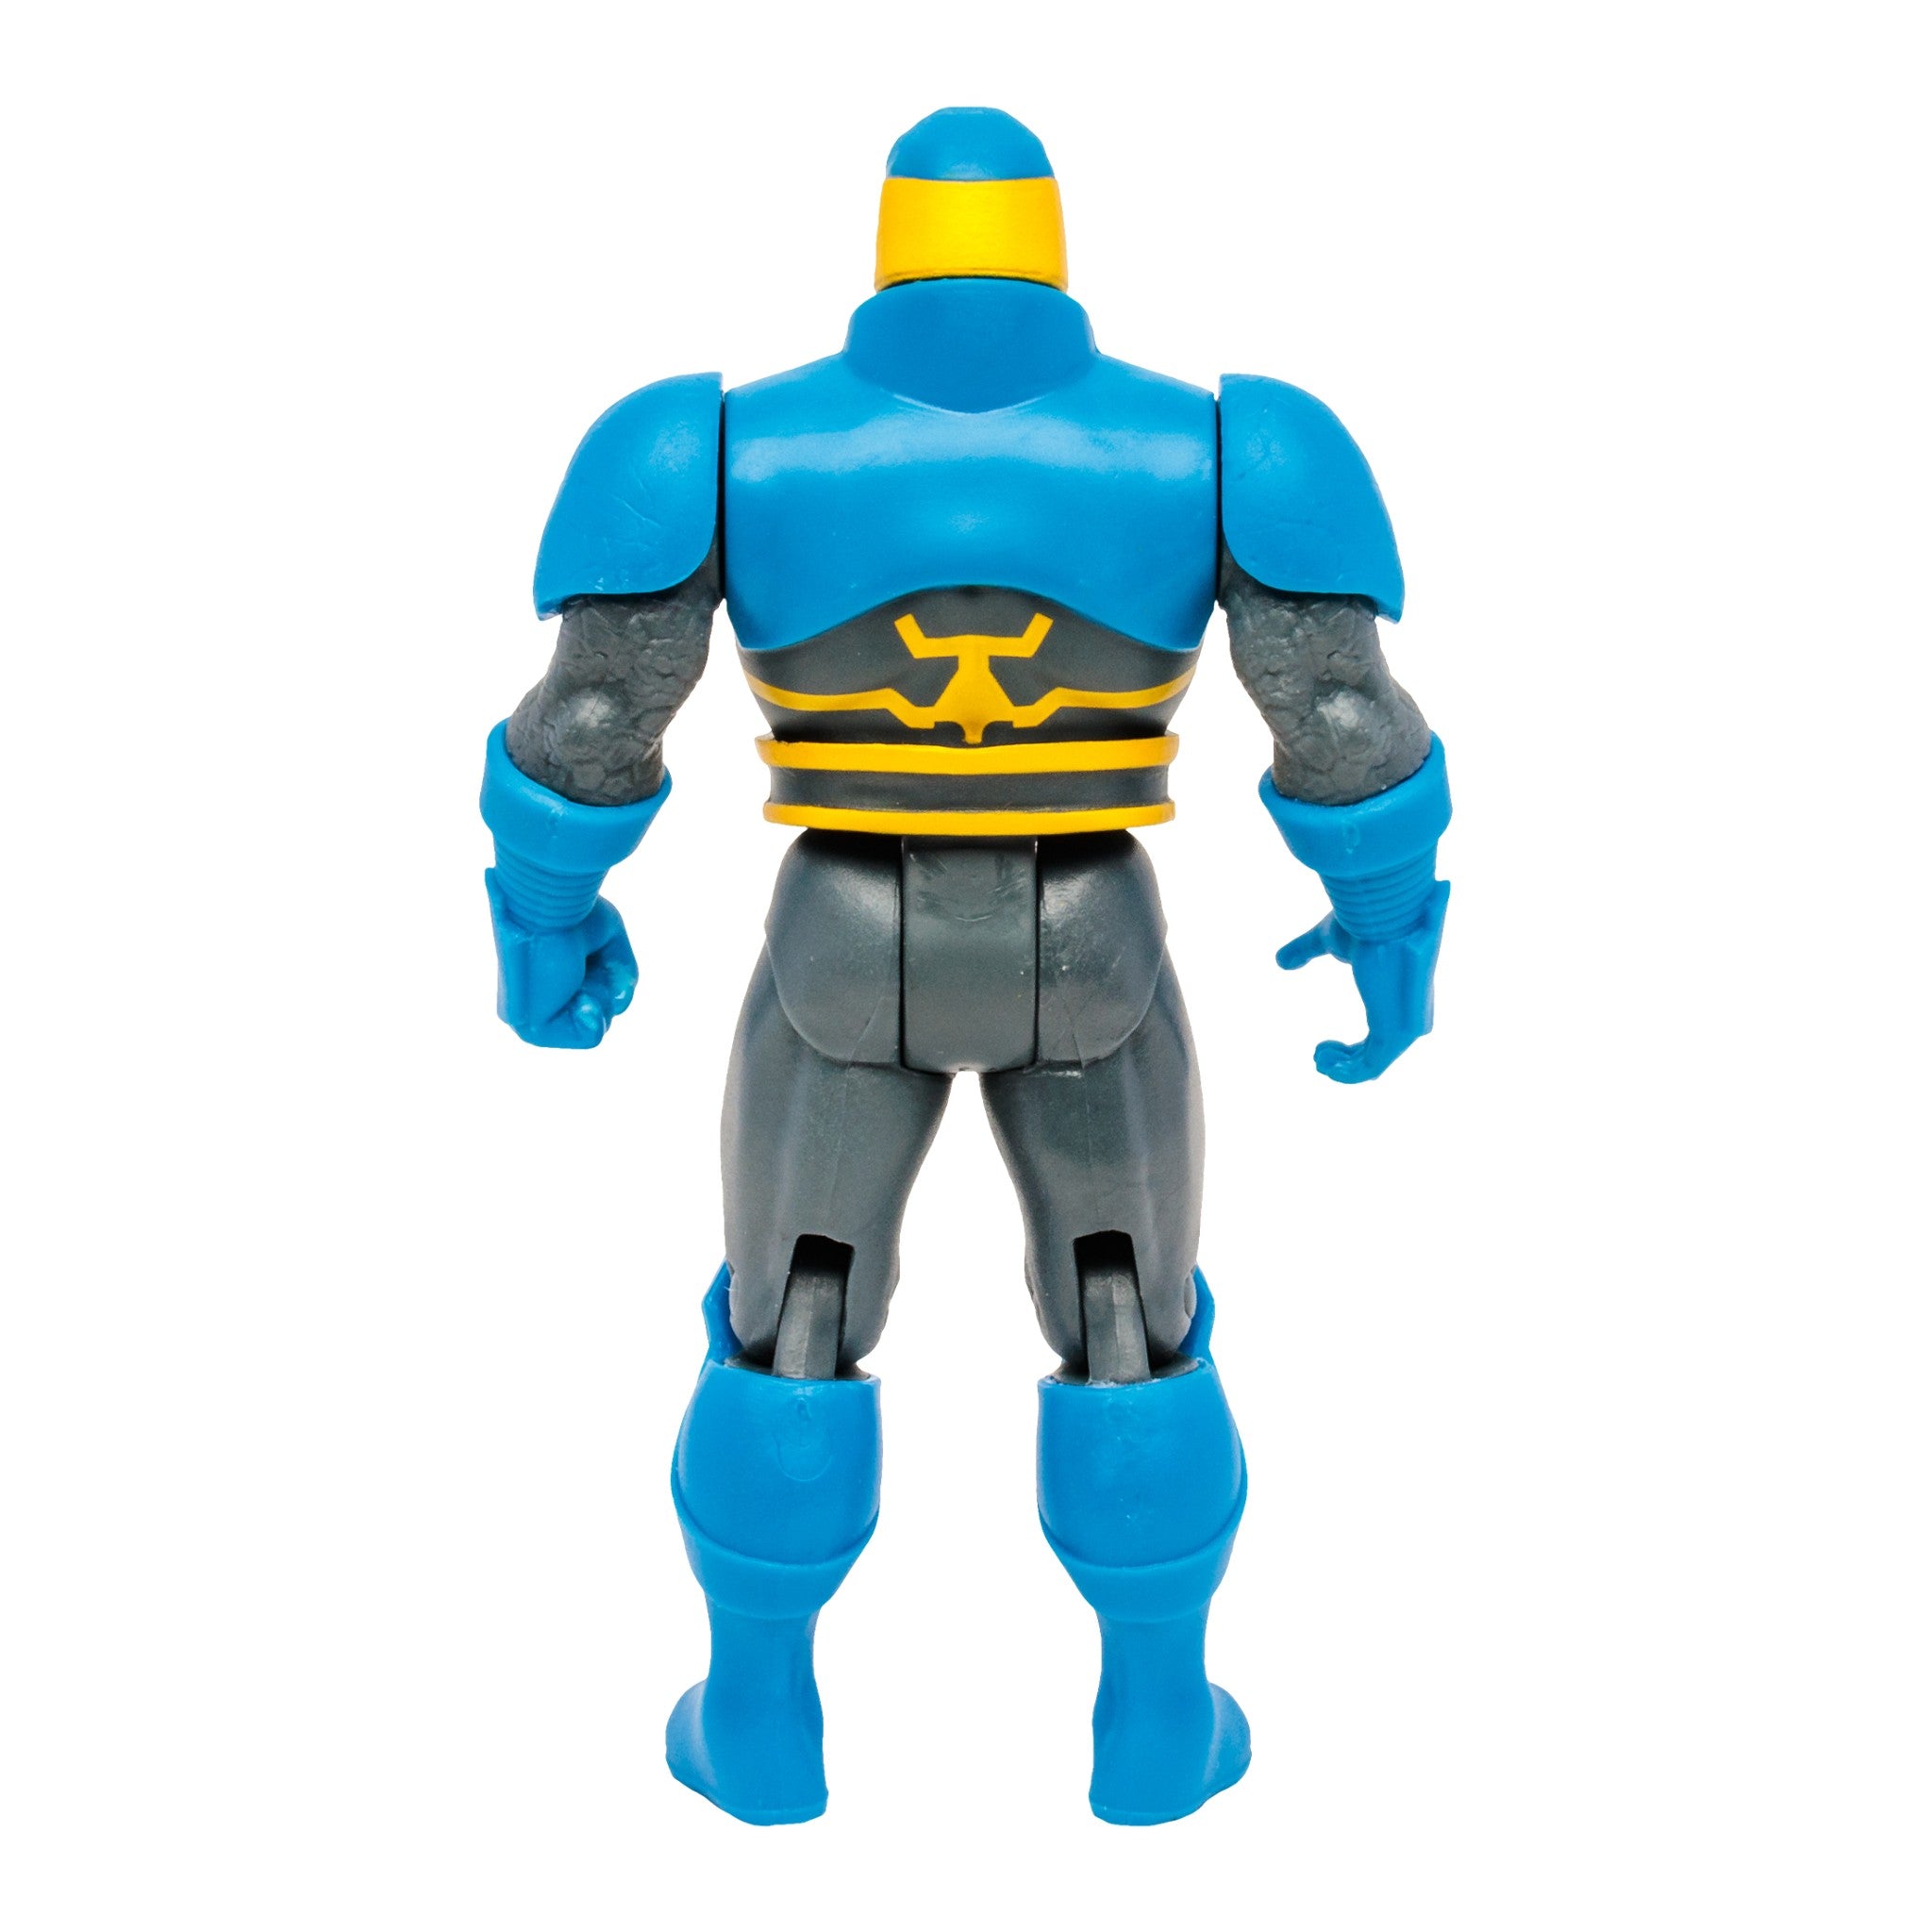 DC Direct Super Powers 2022 4" Darkseid - McFarlane Toys